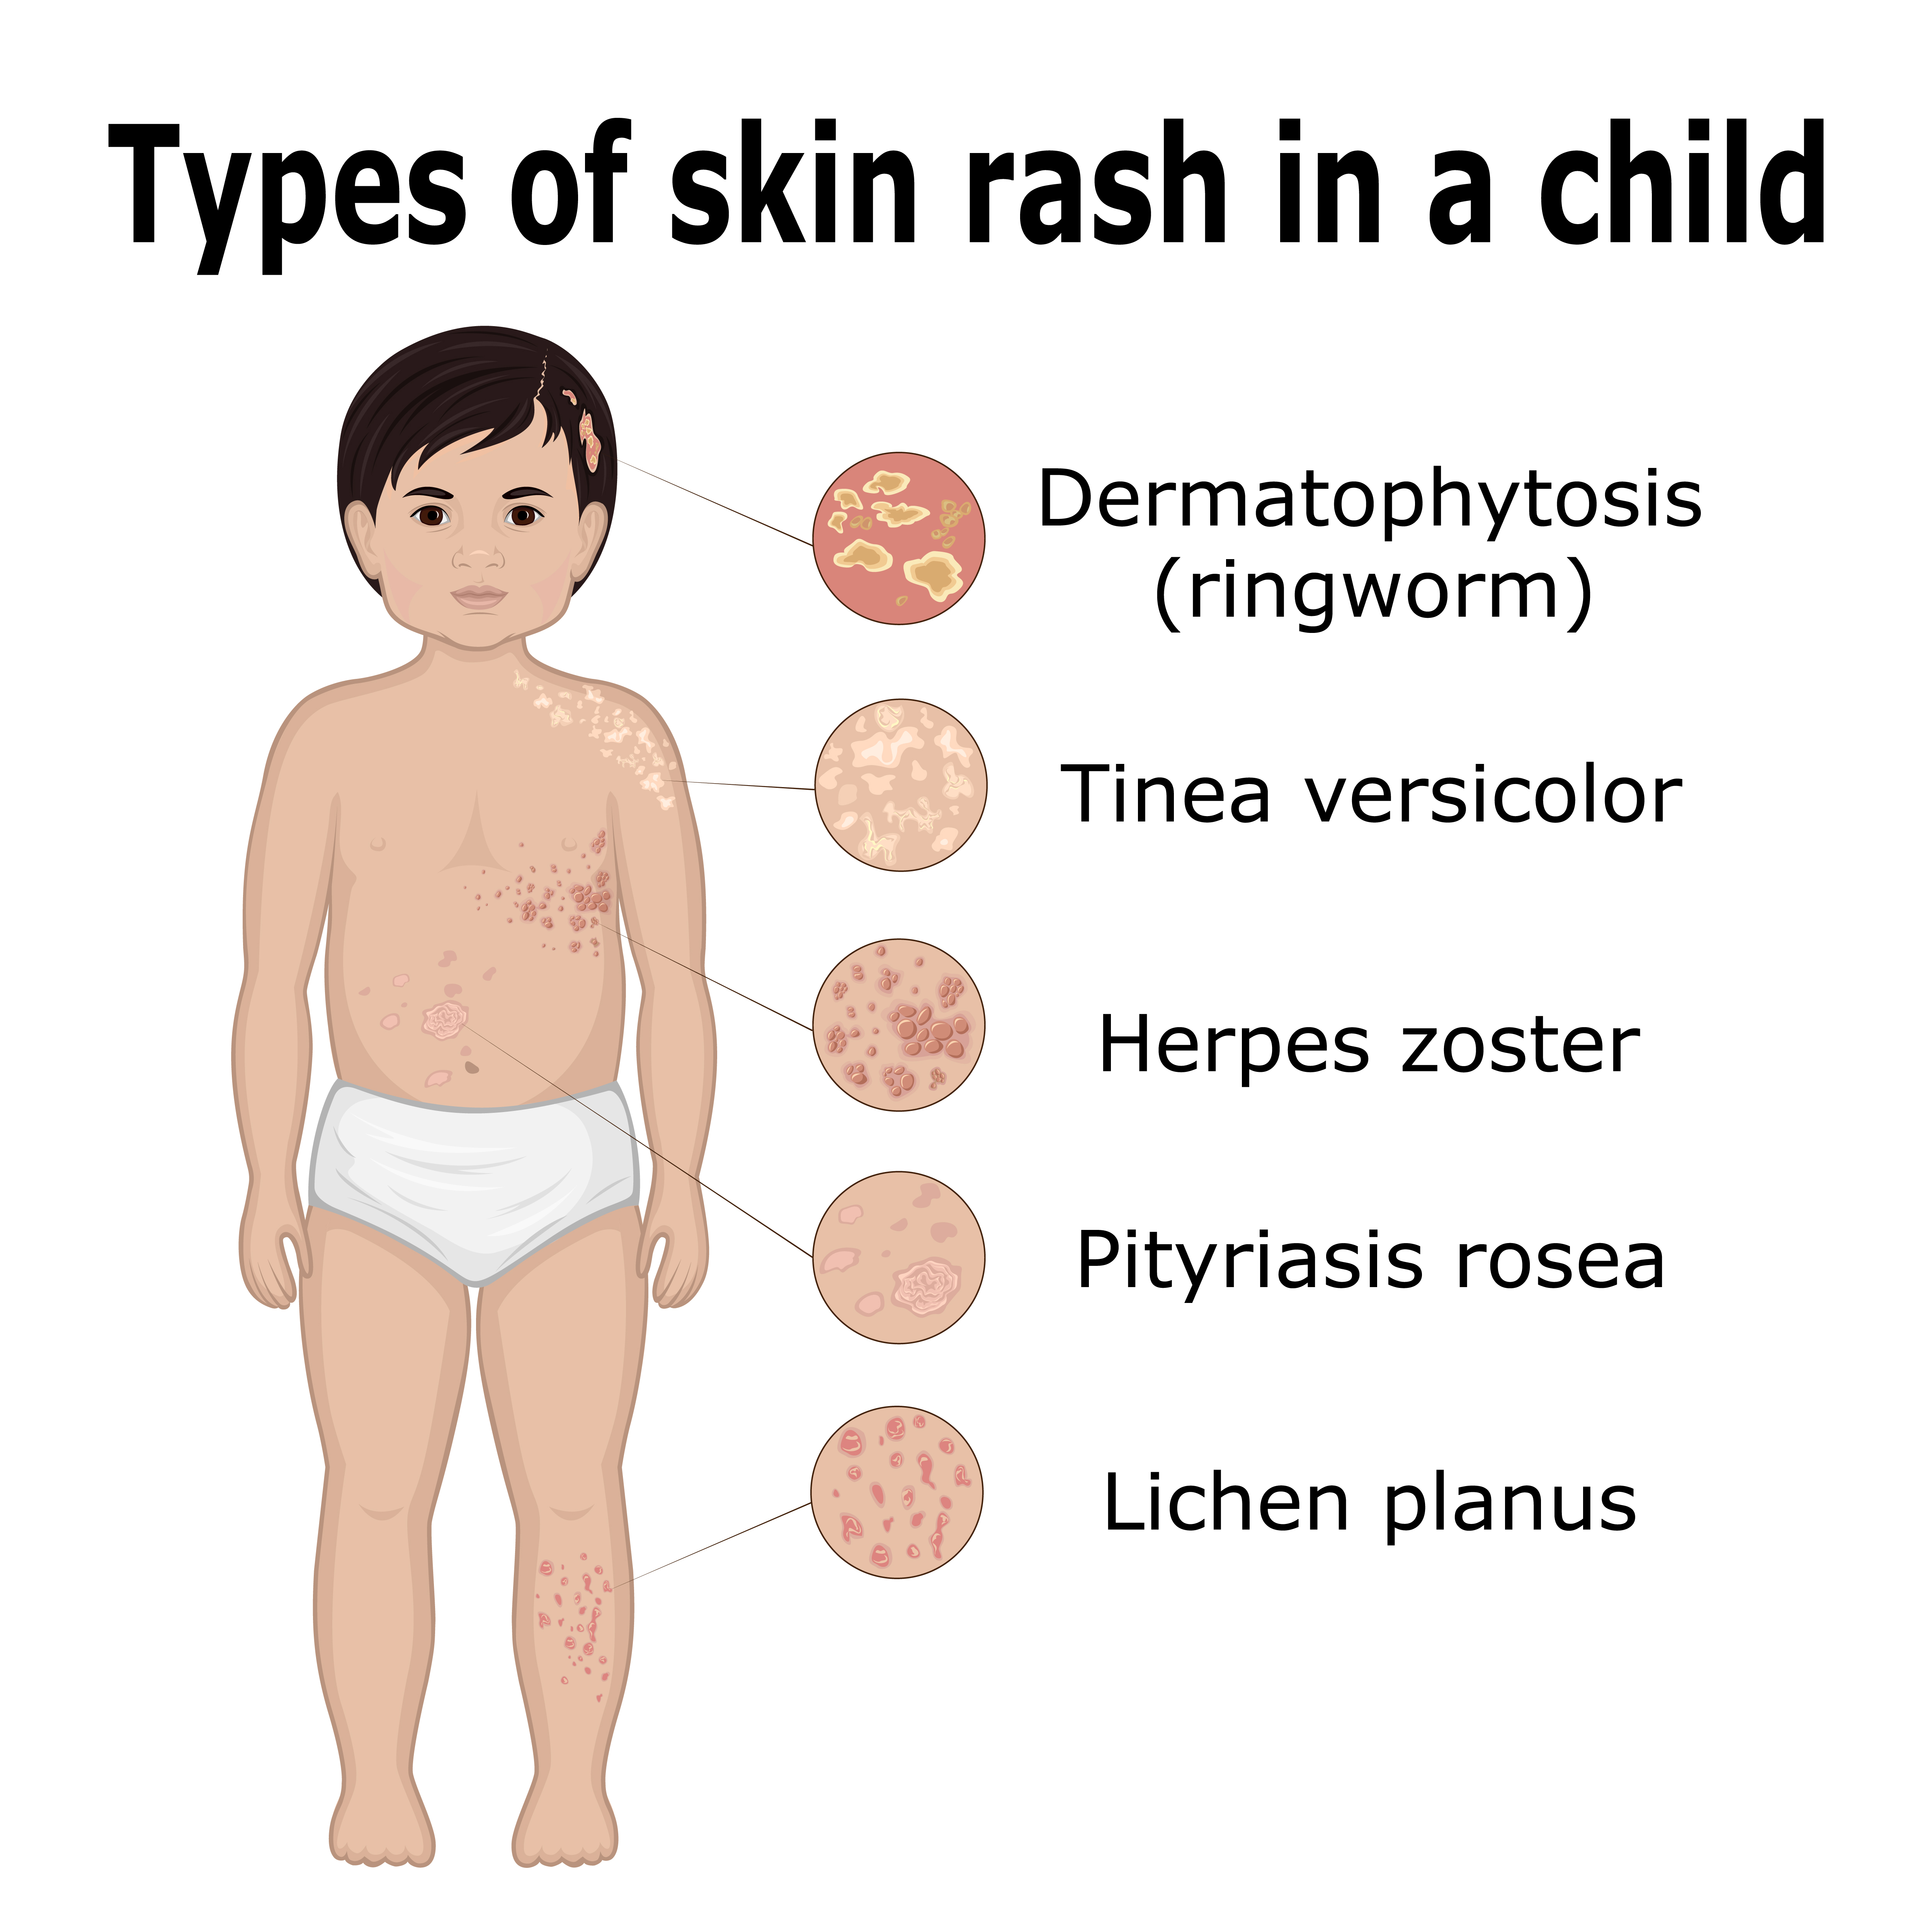 Child Skin Rash Types - Treatment @ MDIMC